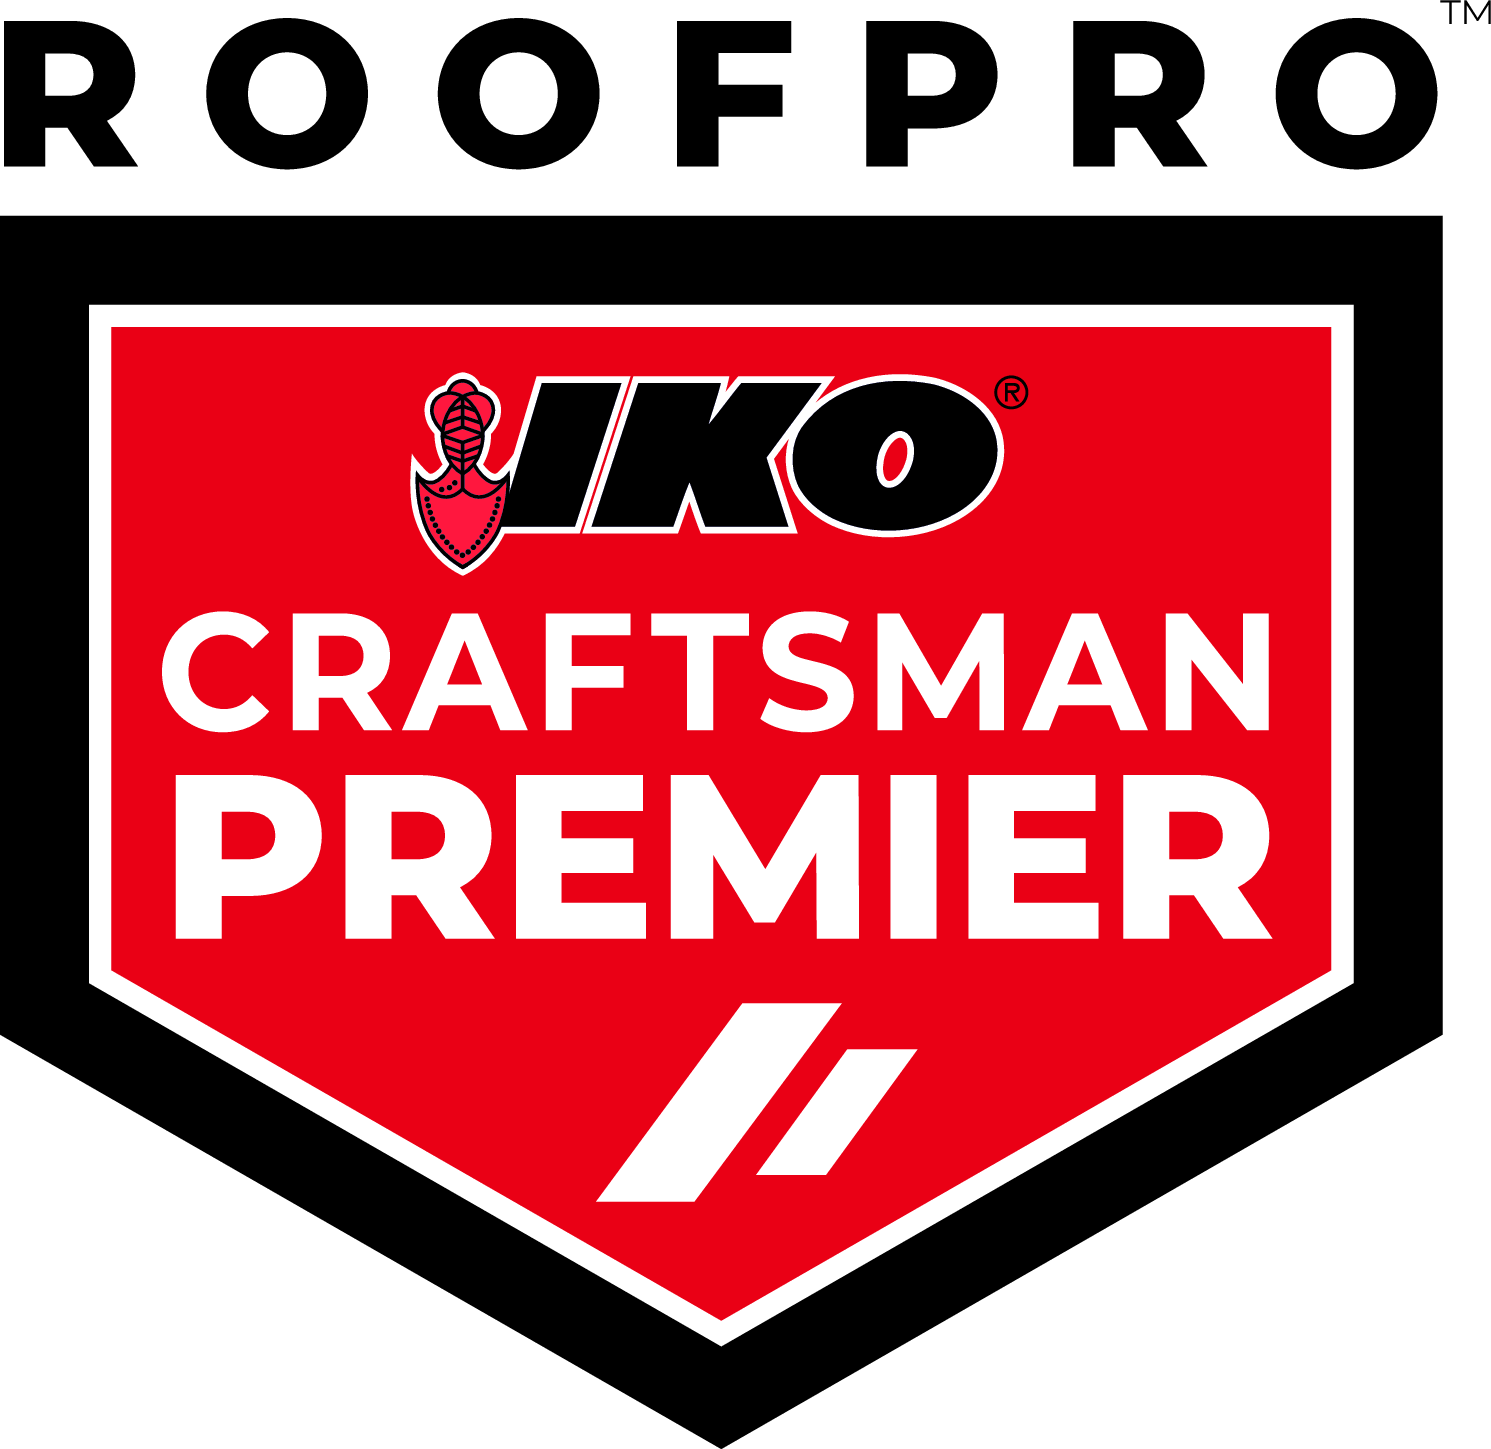 IKO roof pro craftsman premier